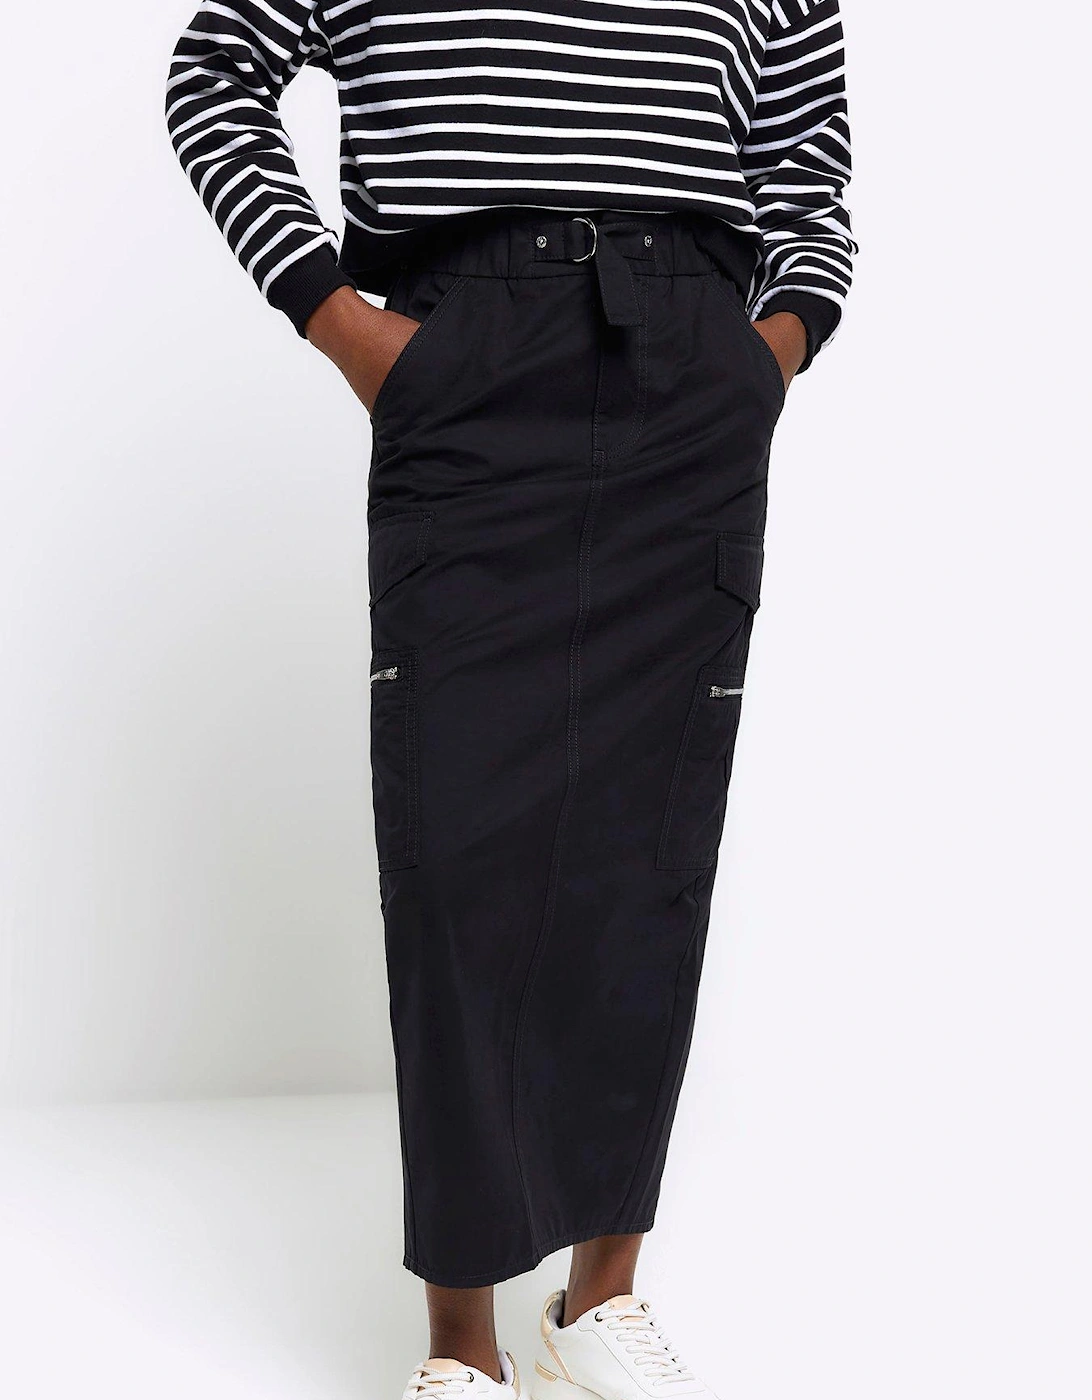 Pocket Detail Pencil Skirt - Black